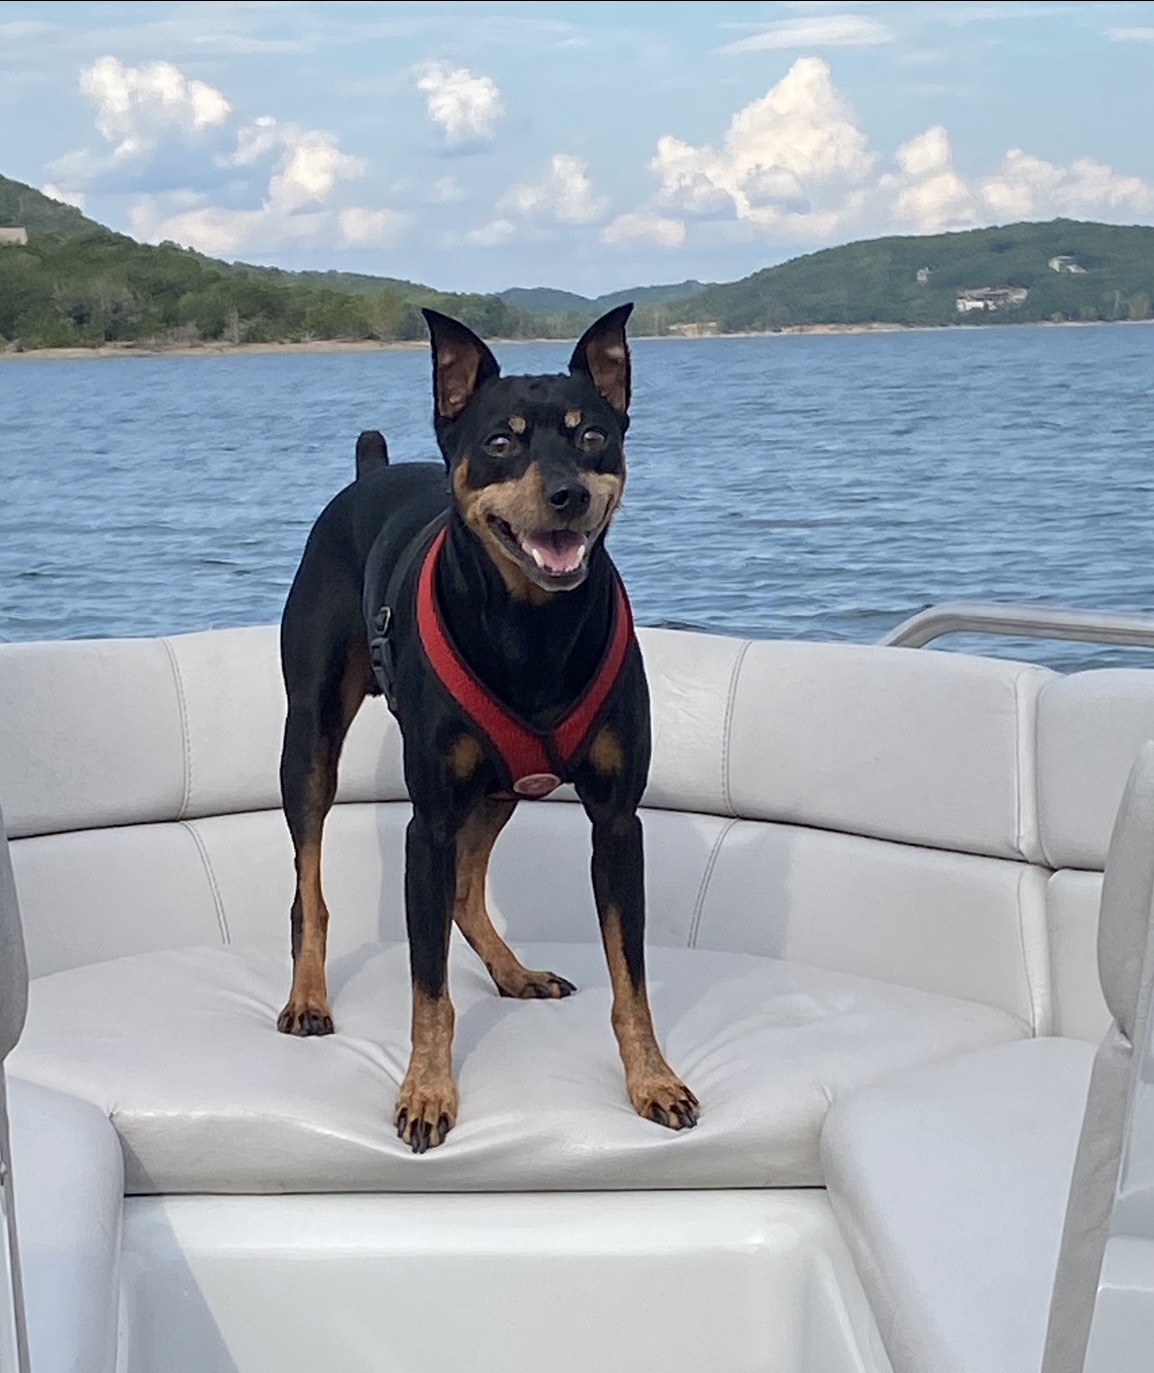 Matt's dog on the lake